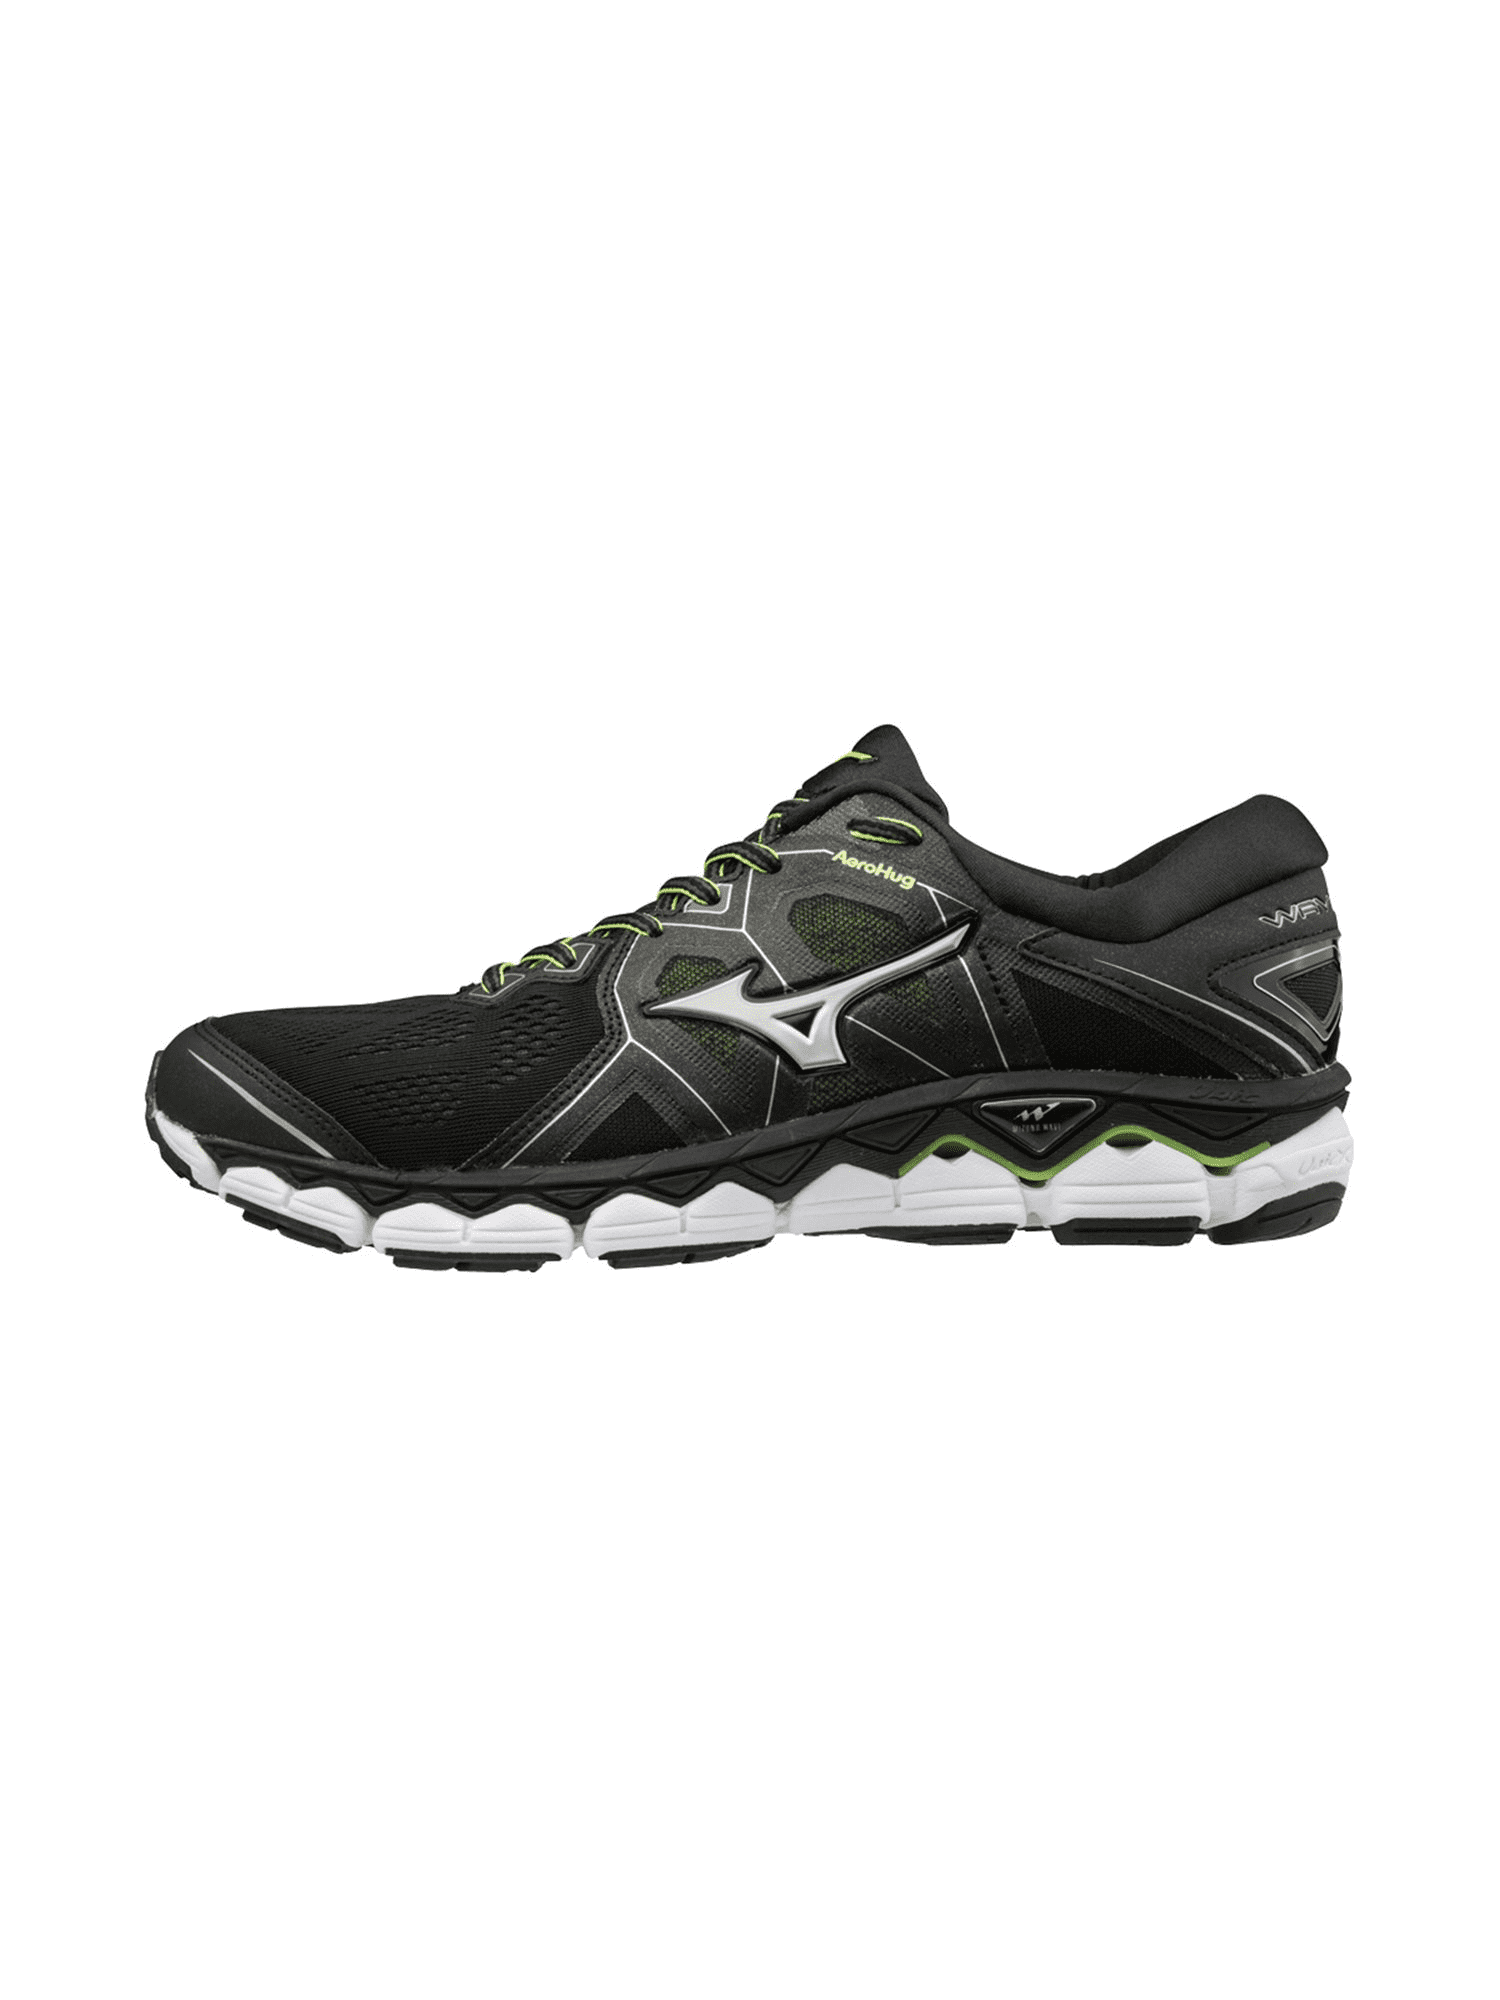 Mizuno Men's Sky 2 Running Shoe, Size 12.5, Black-Safety (903E) -